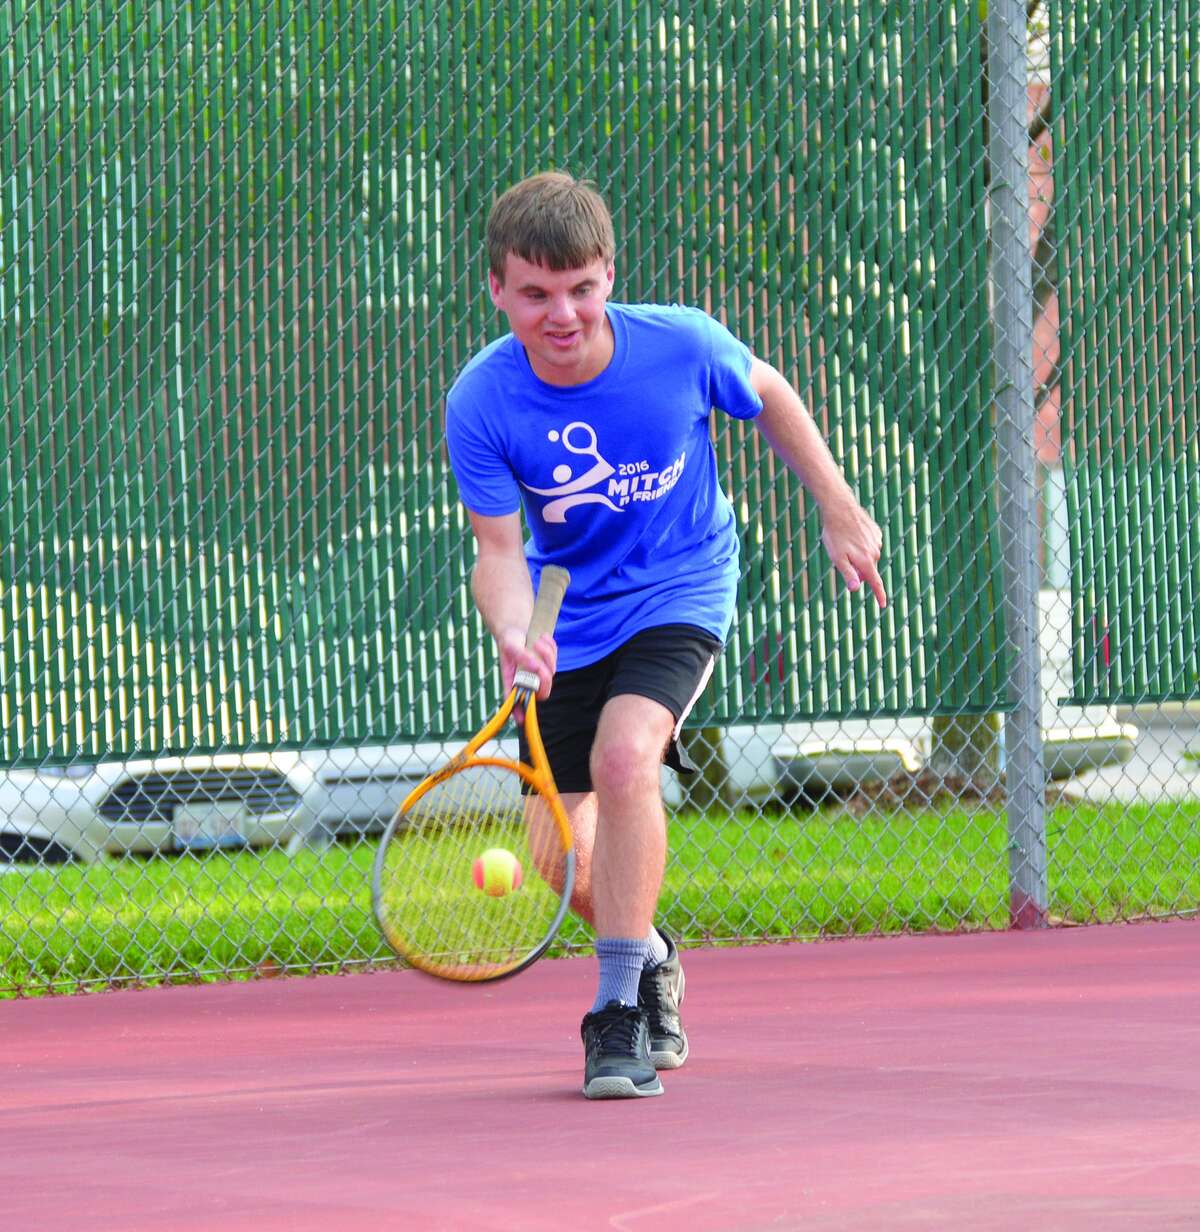 Mitch McGinnis returns a shot during the annual Mitch n’ Friends night at the Edwardsville High School Tennis Center.